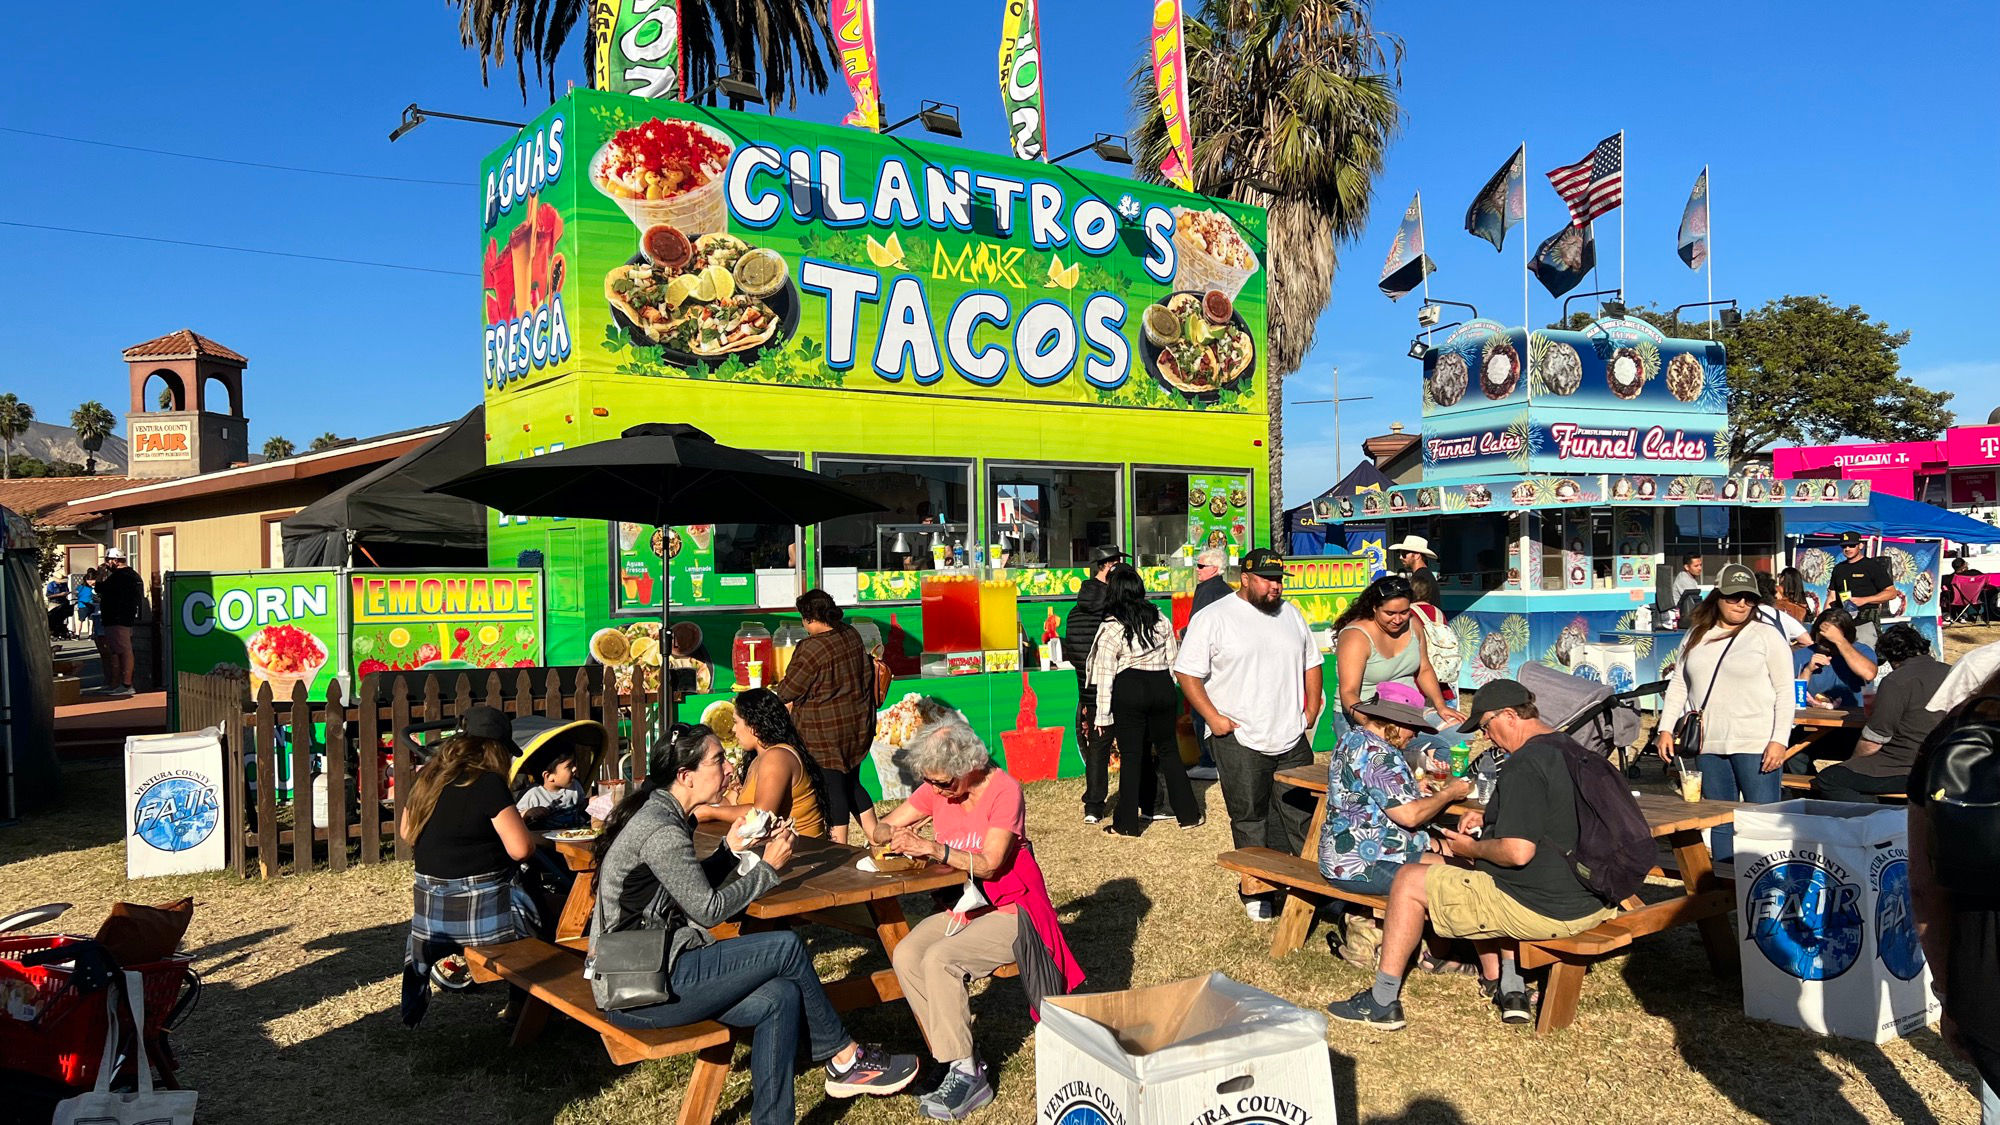 Ventura County Fair Cilantro's Tacos